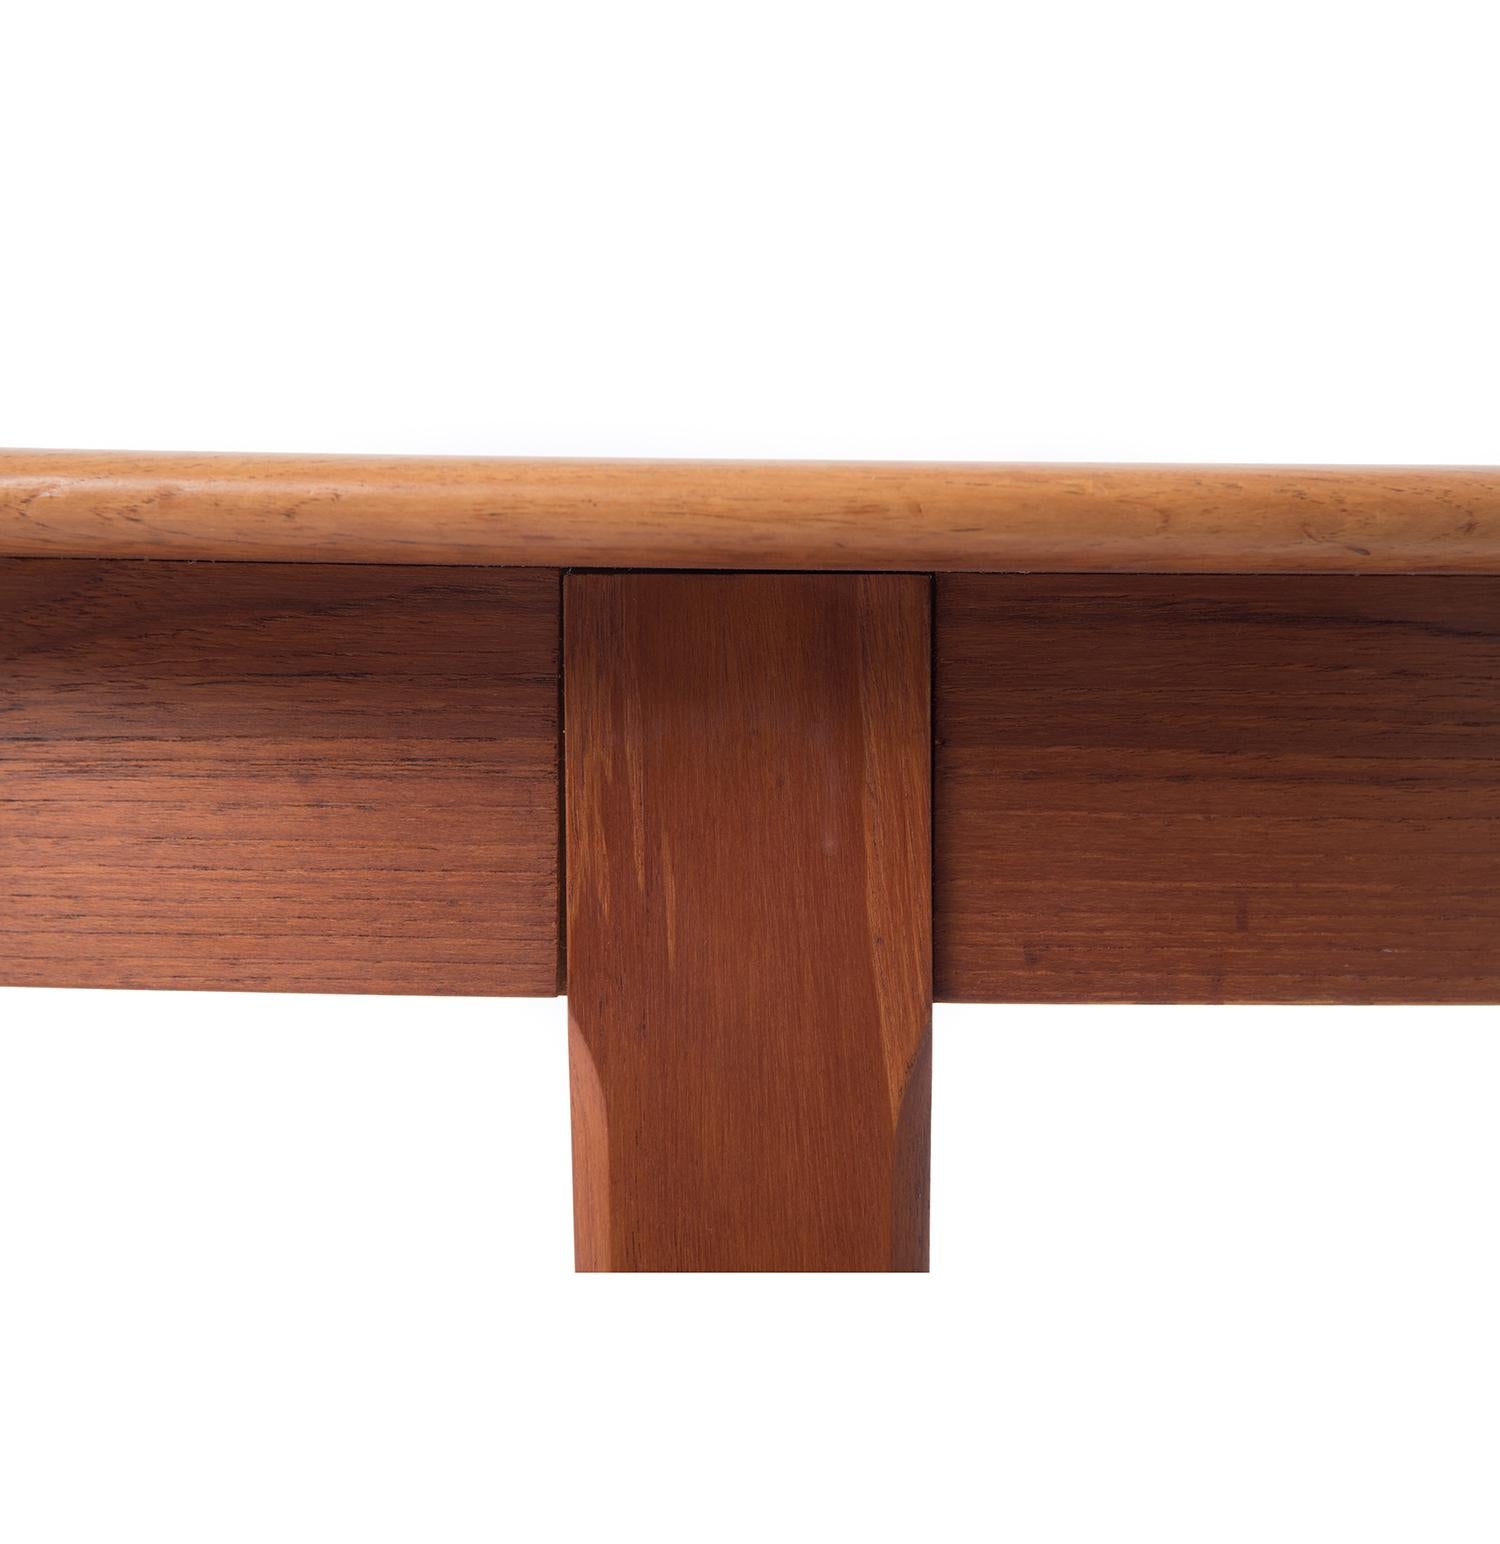 20th Century Danish Modern Round Teak Table with Edge Band Detail